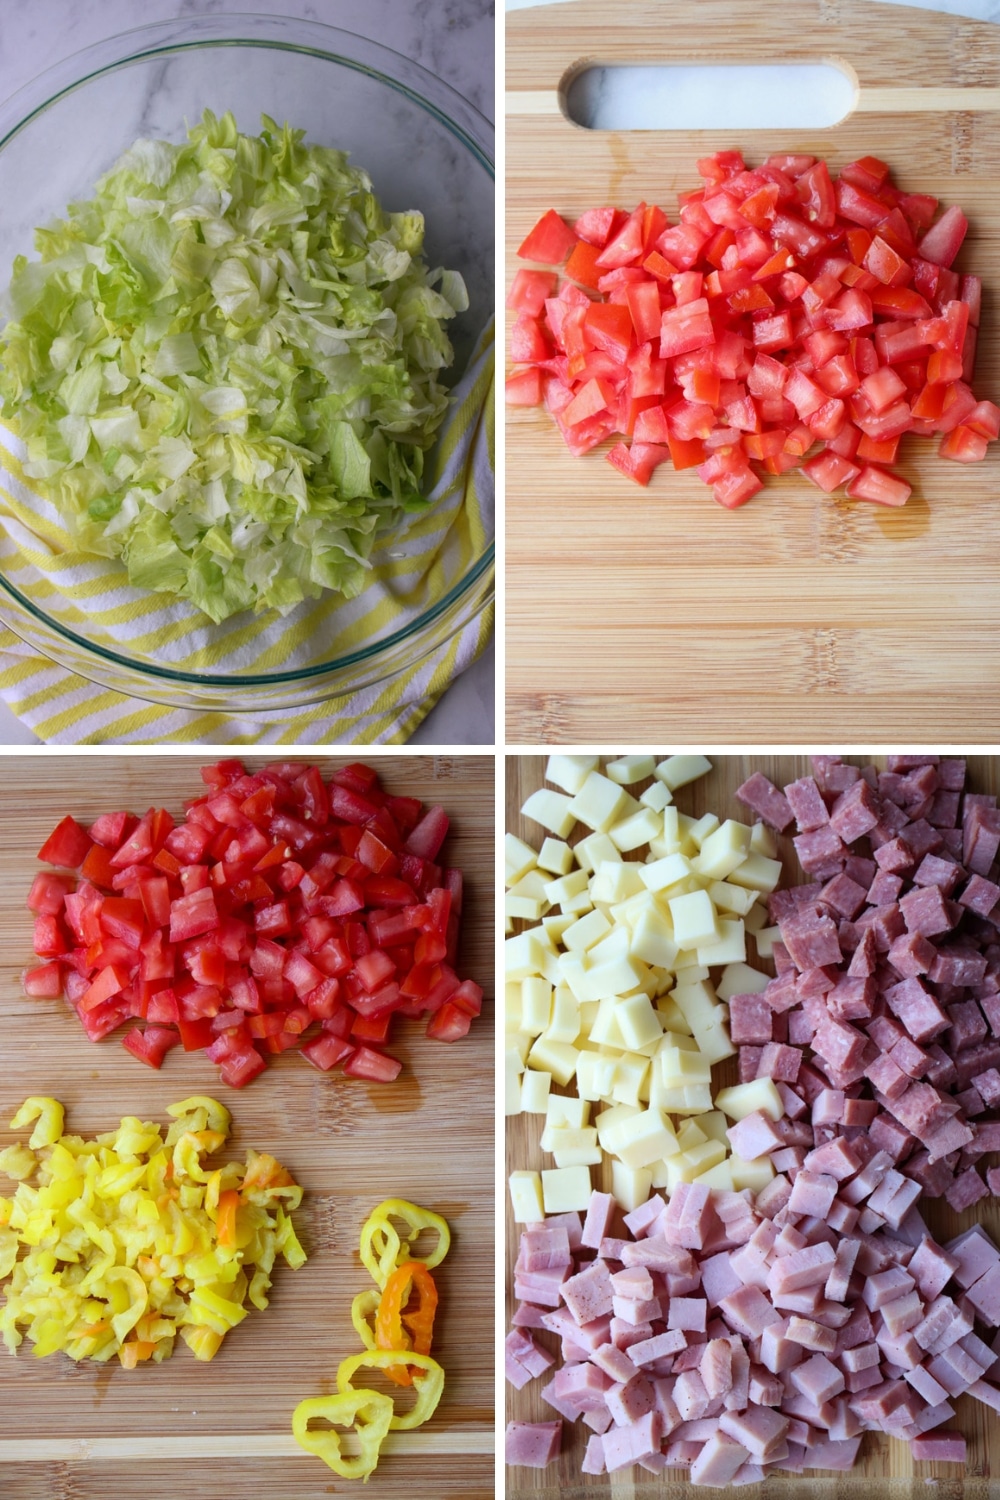 How to make grinder chopped salad